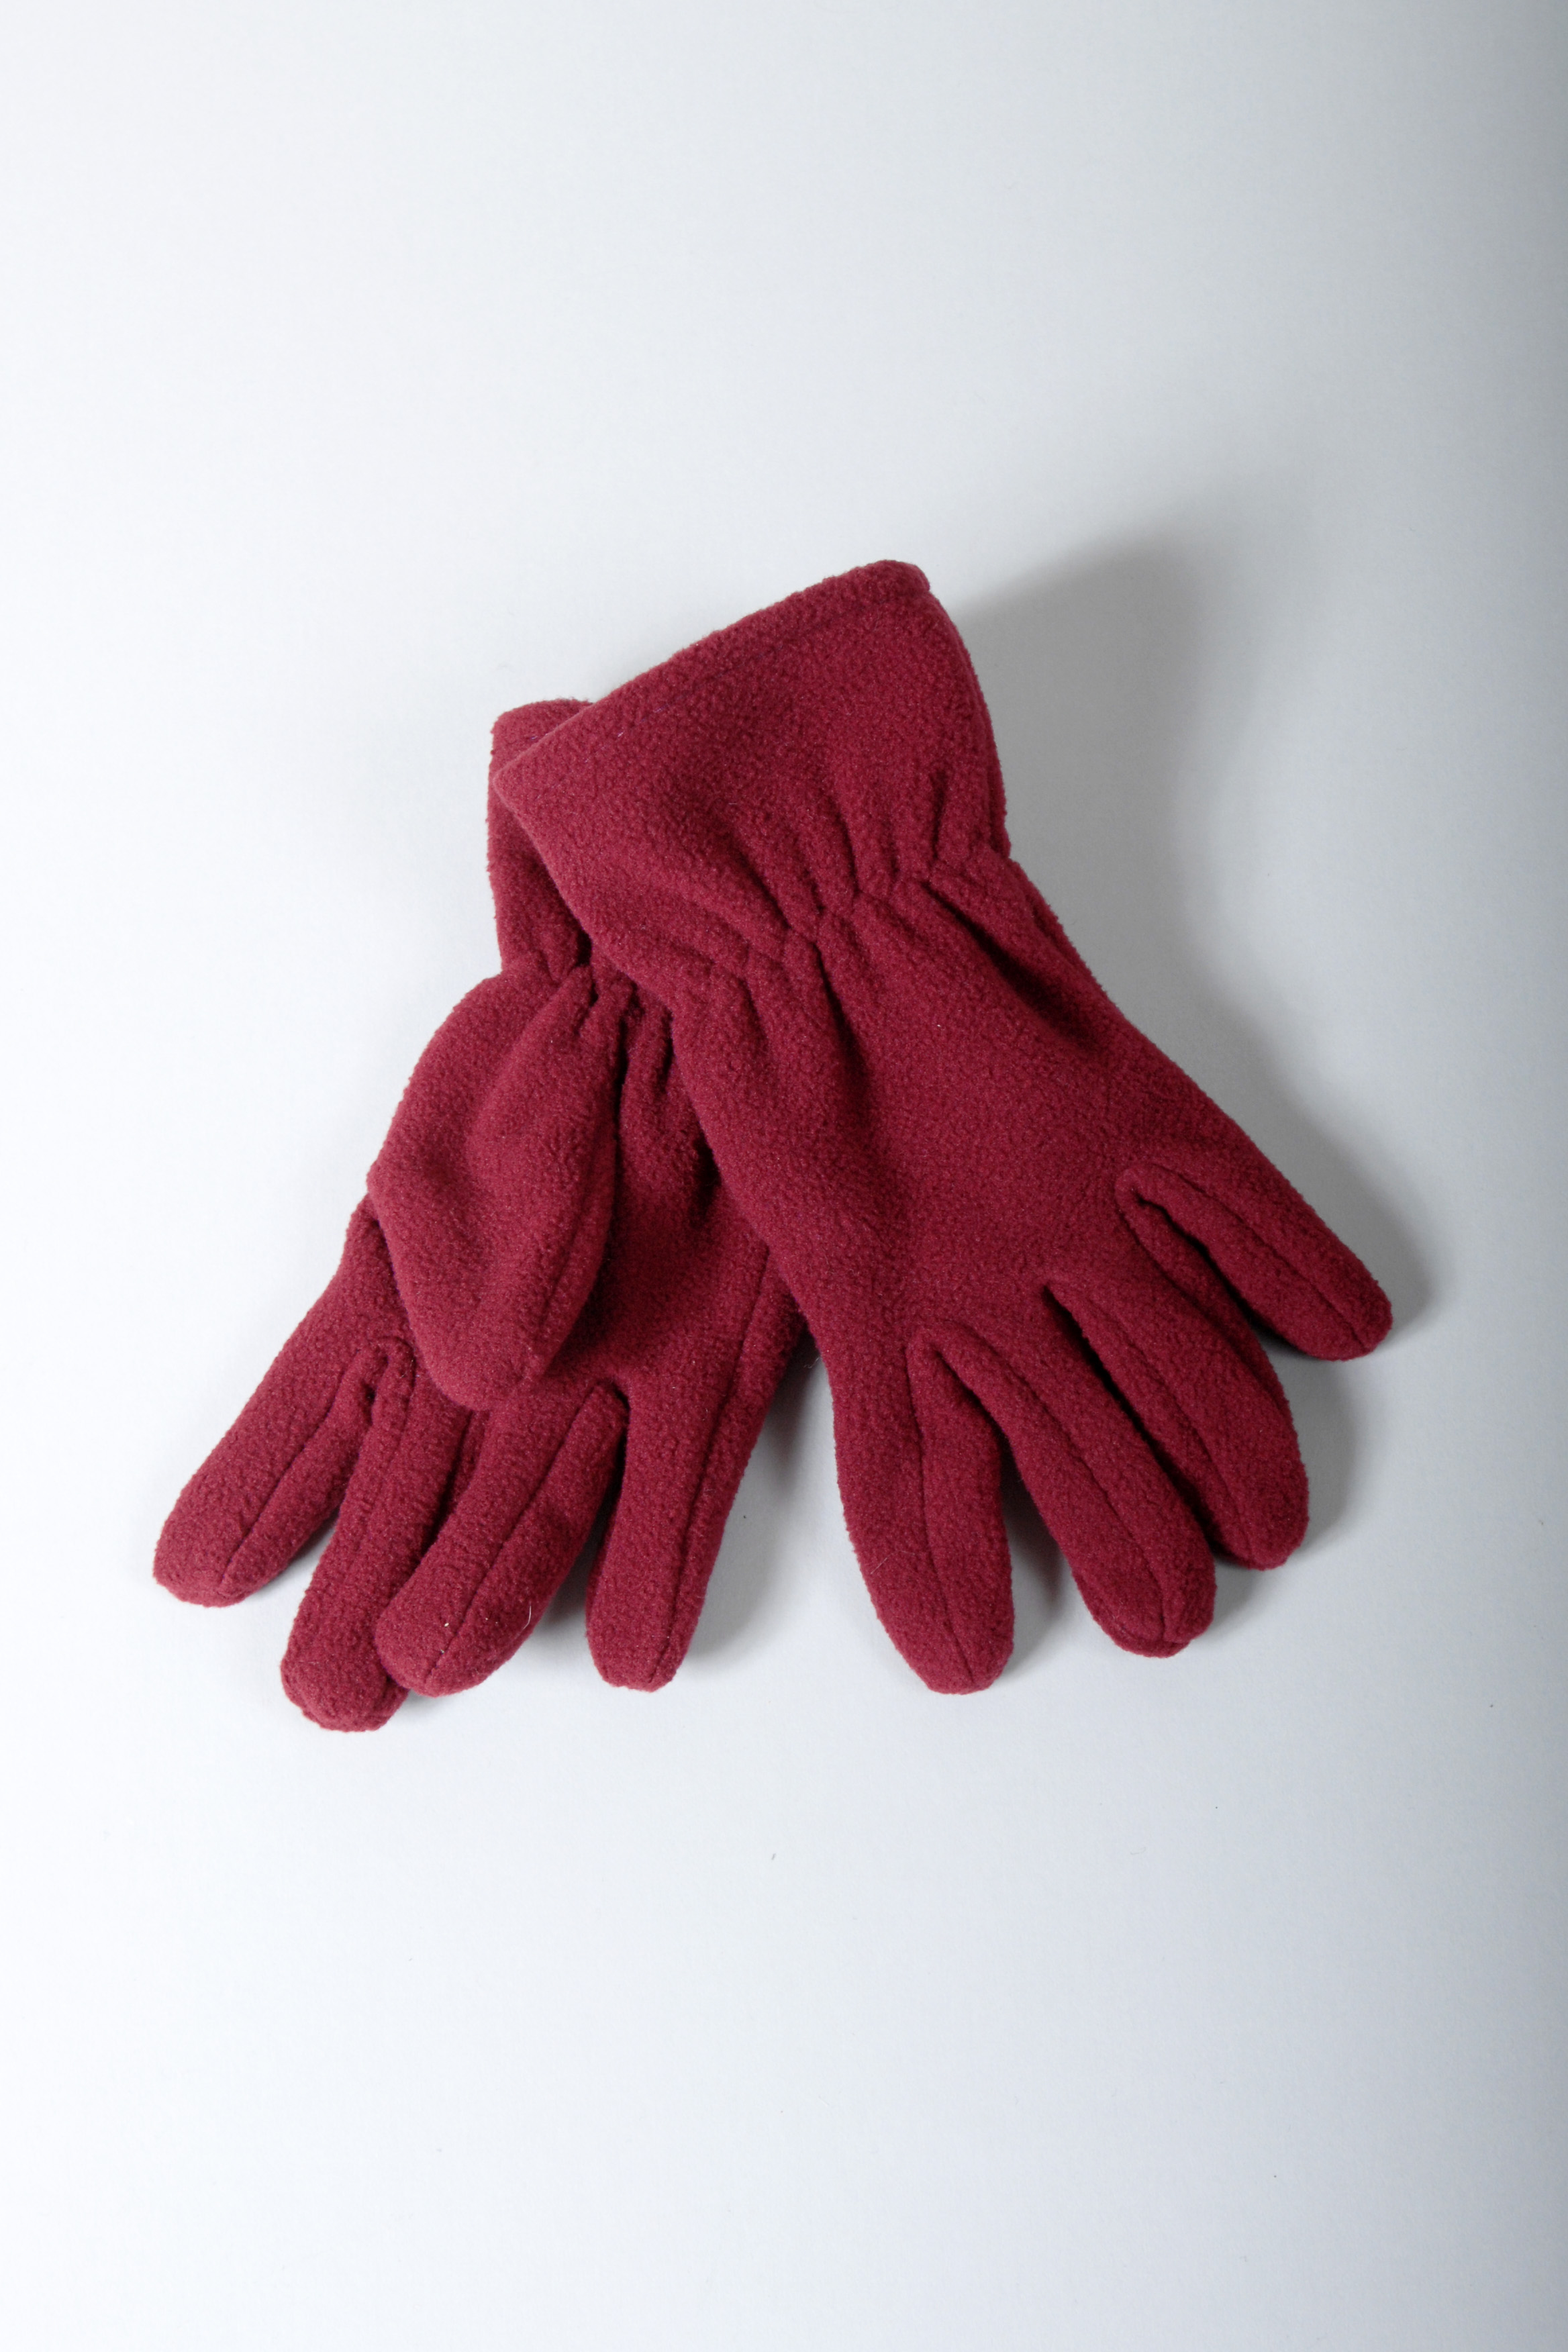 Maroon Fleece Gloves - Age 2/4 Years